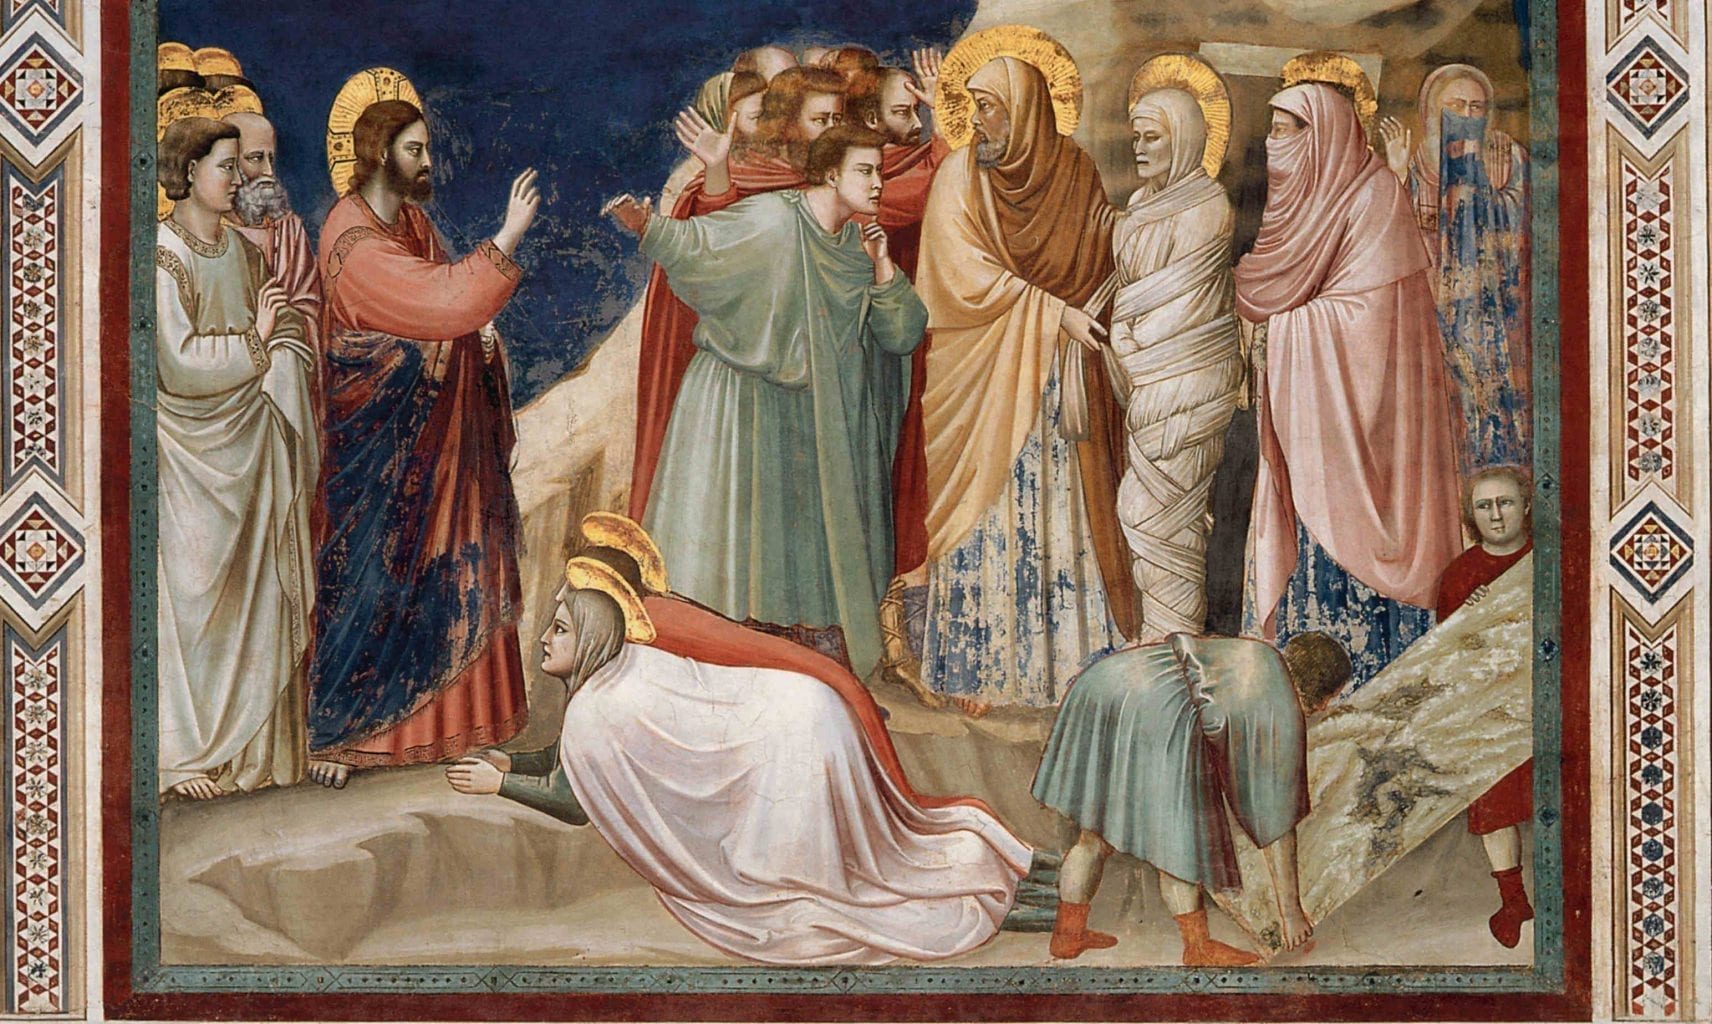 The resurrection of Lazarus, painted by Giotto di Bondone for the Scrovegni (Arena) Chapel, in Padua, Italy, circa 1304-06.